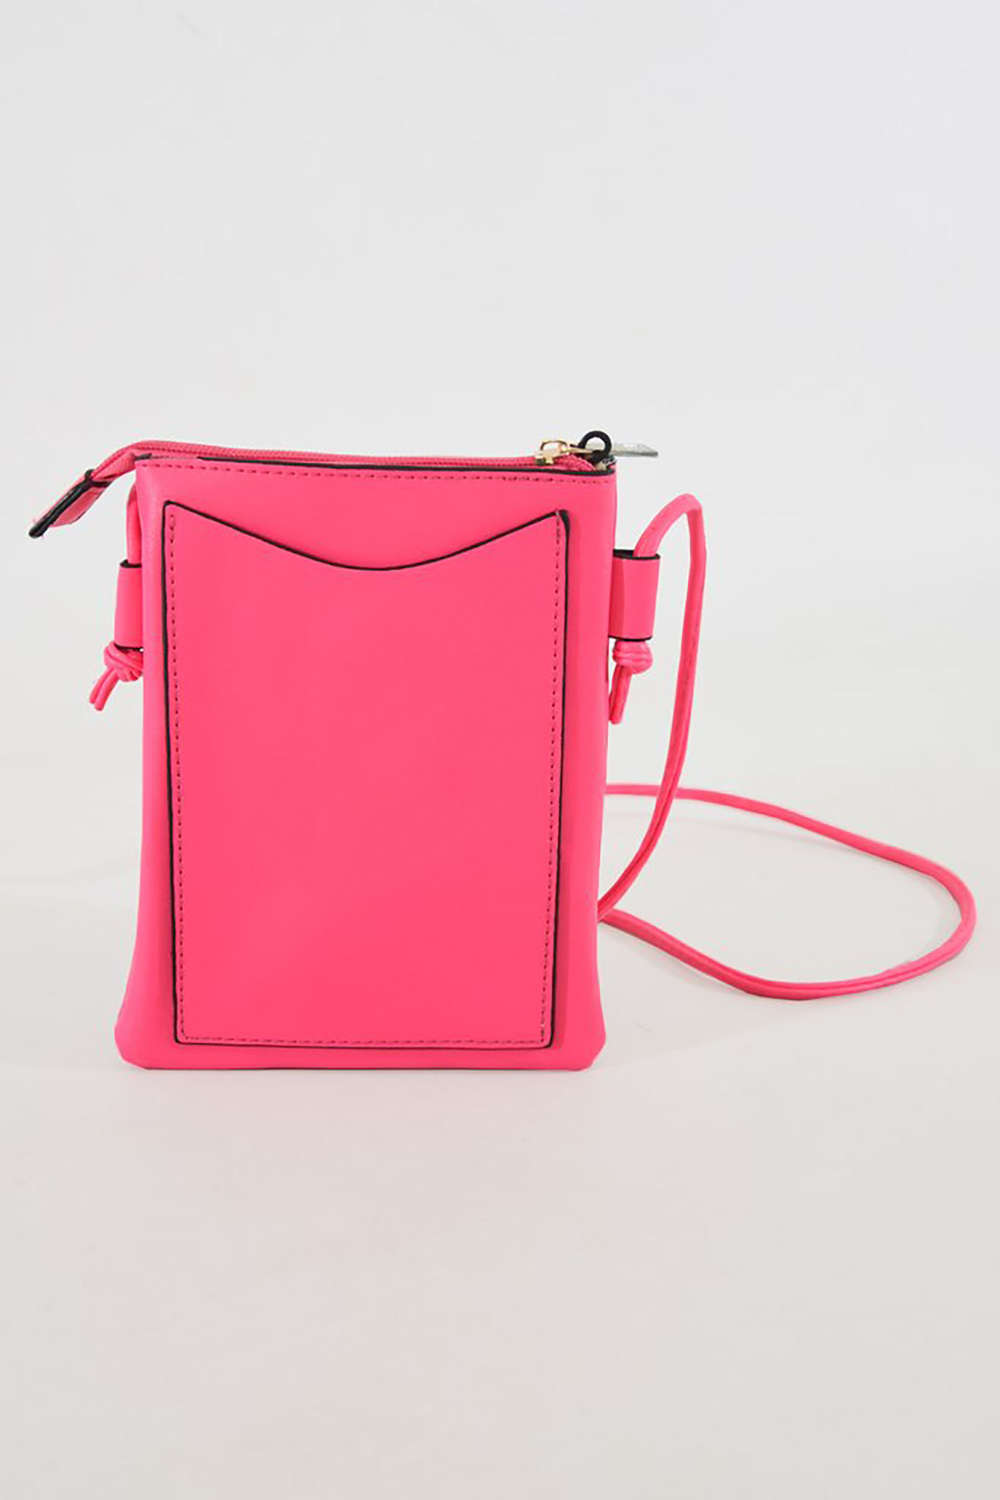 Neon pink crossbody phone purse